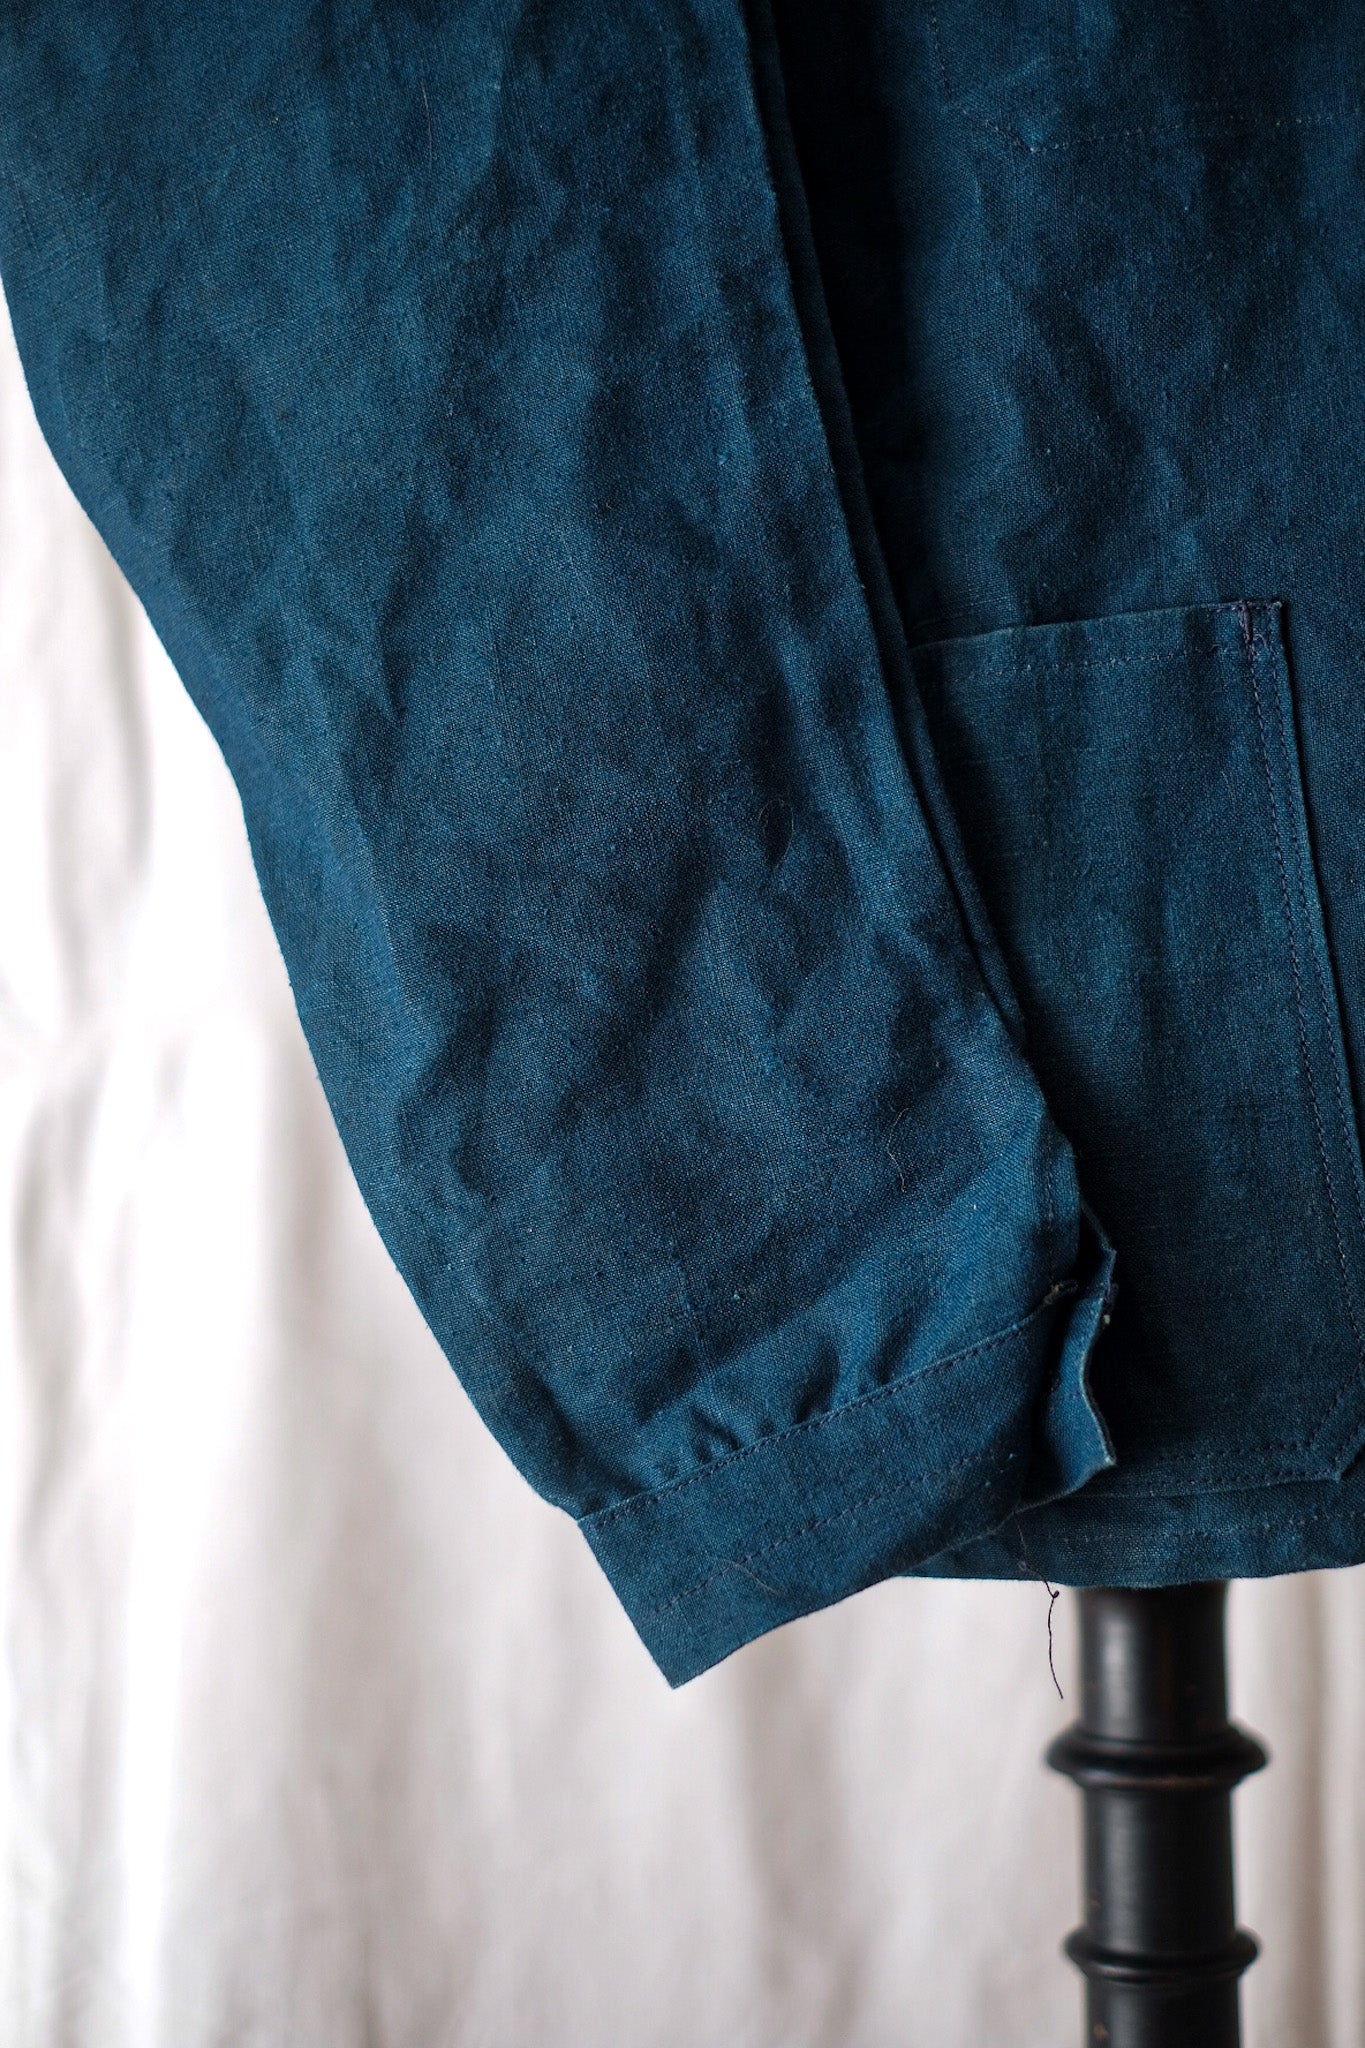 【~30's】French Vintage Indigo Linen Work Jacket